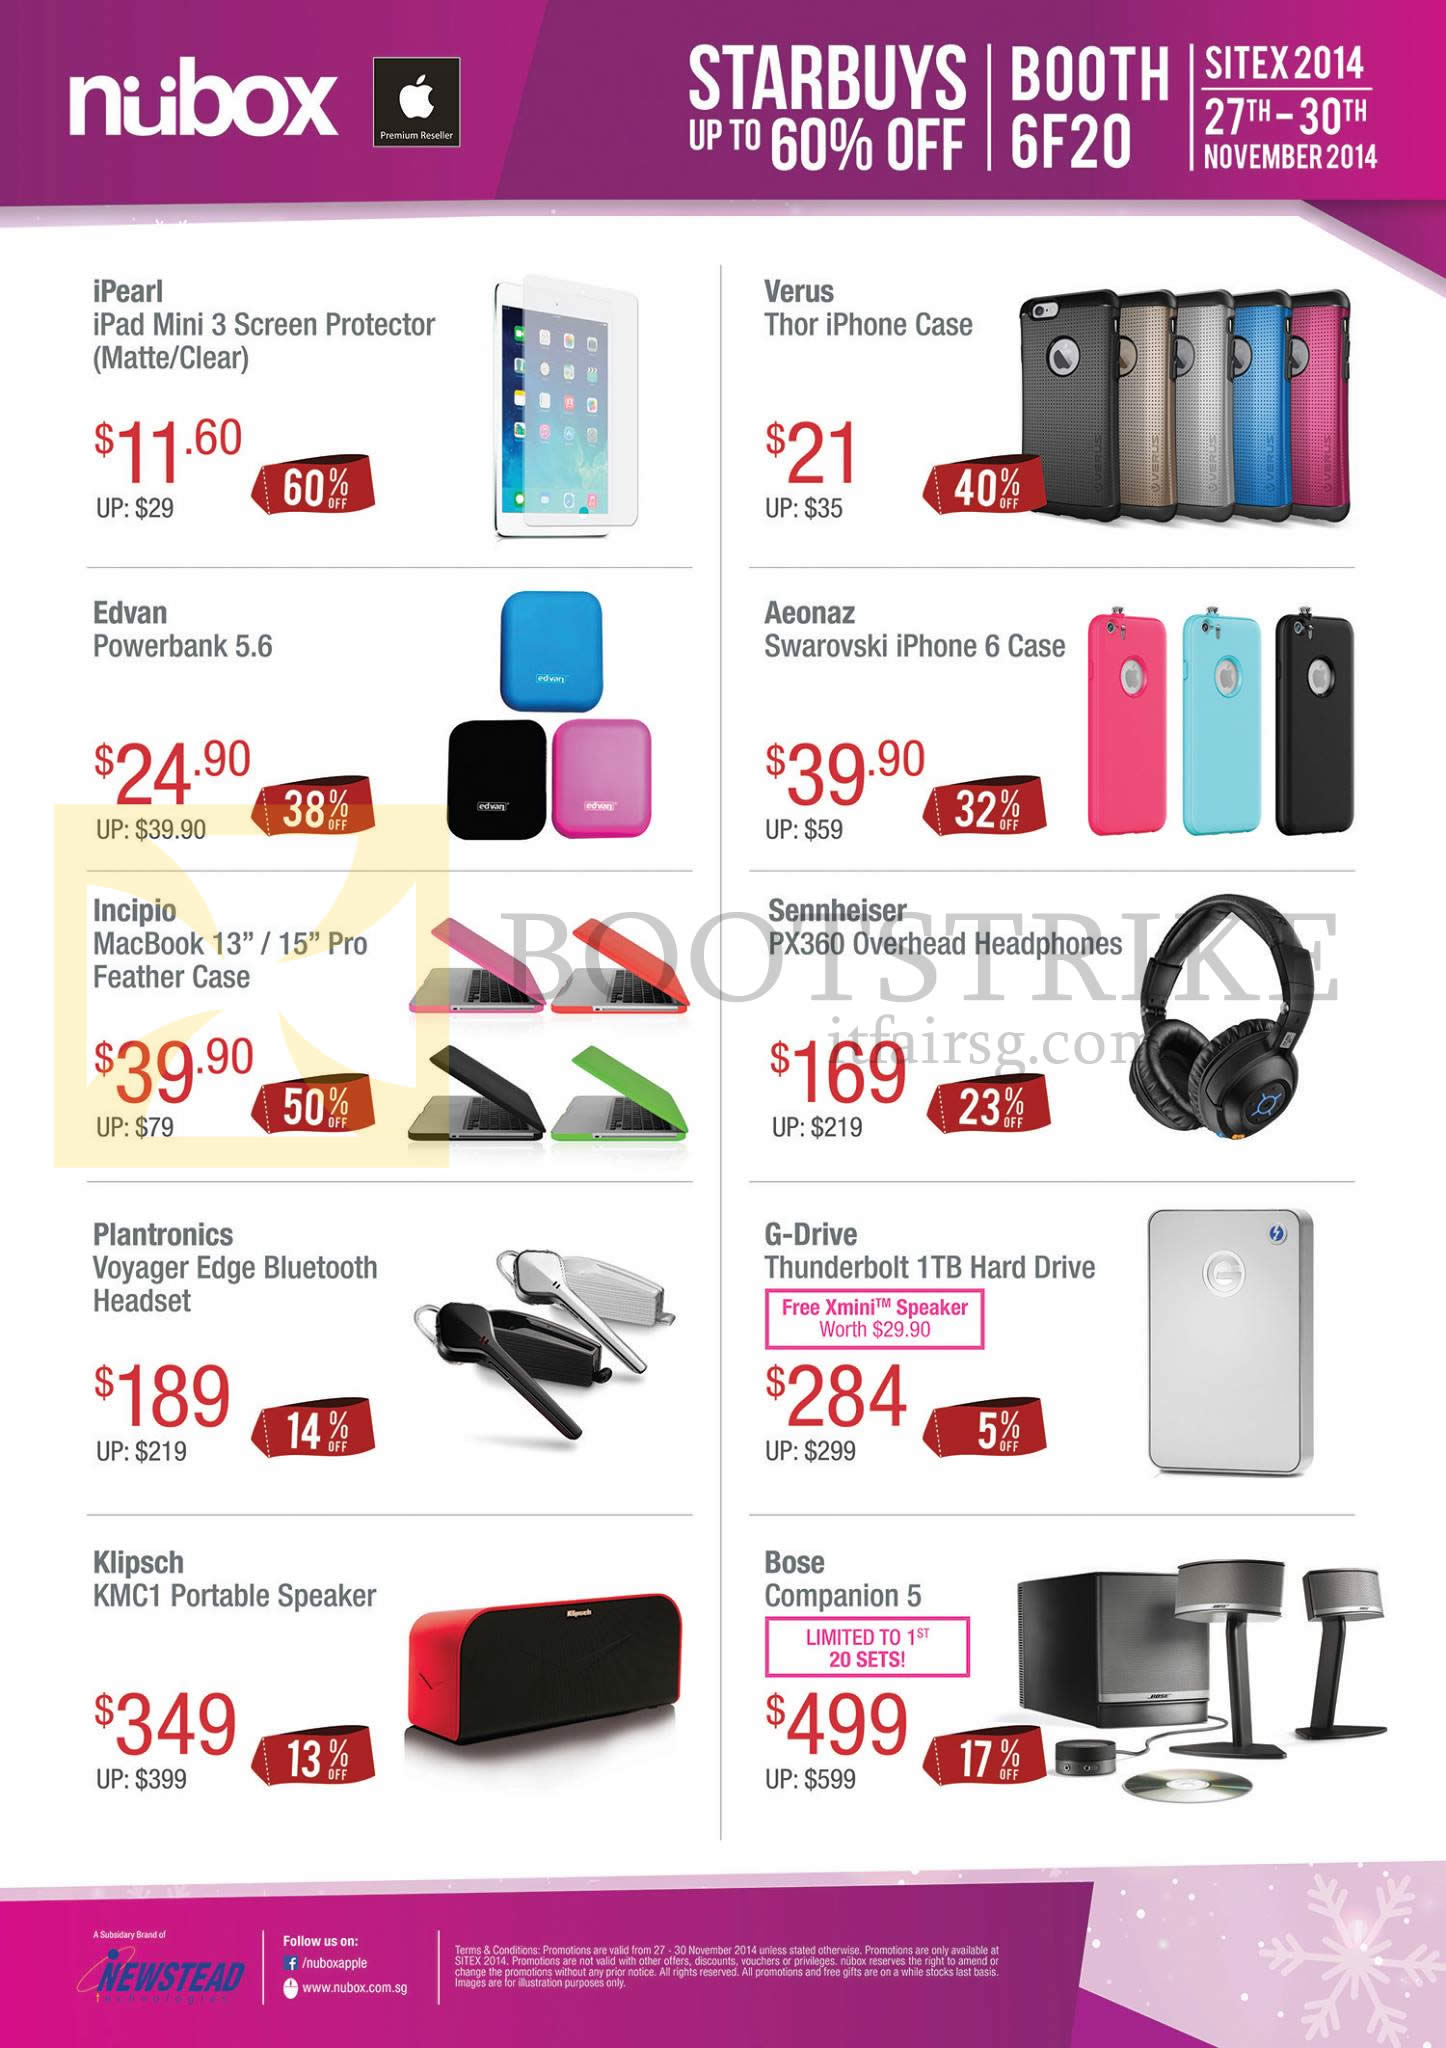 SITEX 2014 price list image brochure of Nubox Accessories, Headphones, Hard Disk Drive, Bose Speaker, PowerBank, Feather Case, Bluetooth Headset, Portable Speaker